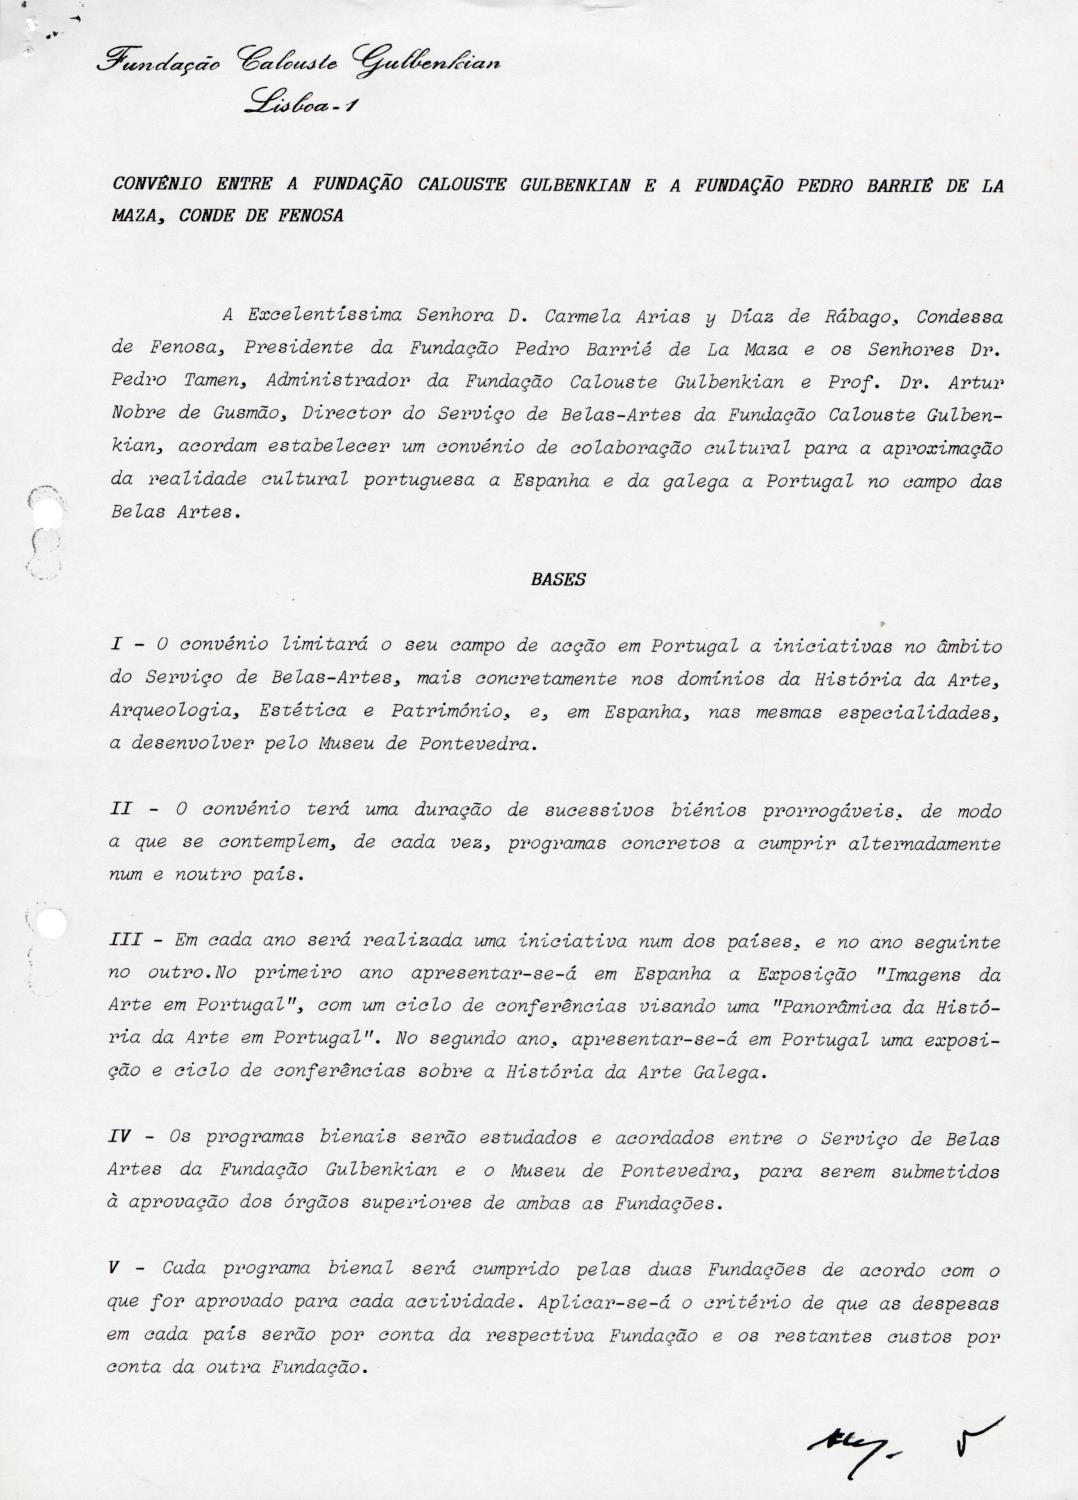 Fundação Calouste Gulbenkian, Fundación Pedro Barrié de la Maza (FPBM)